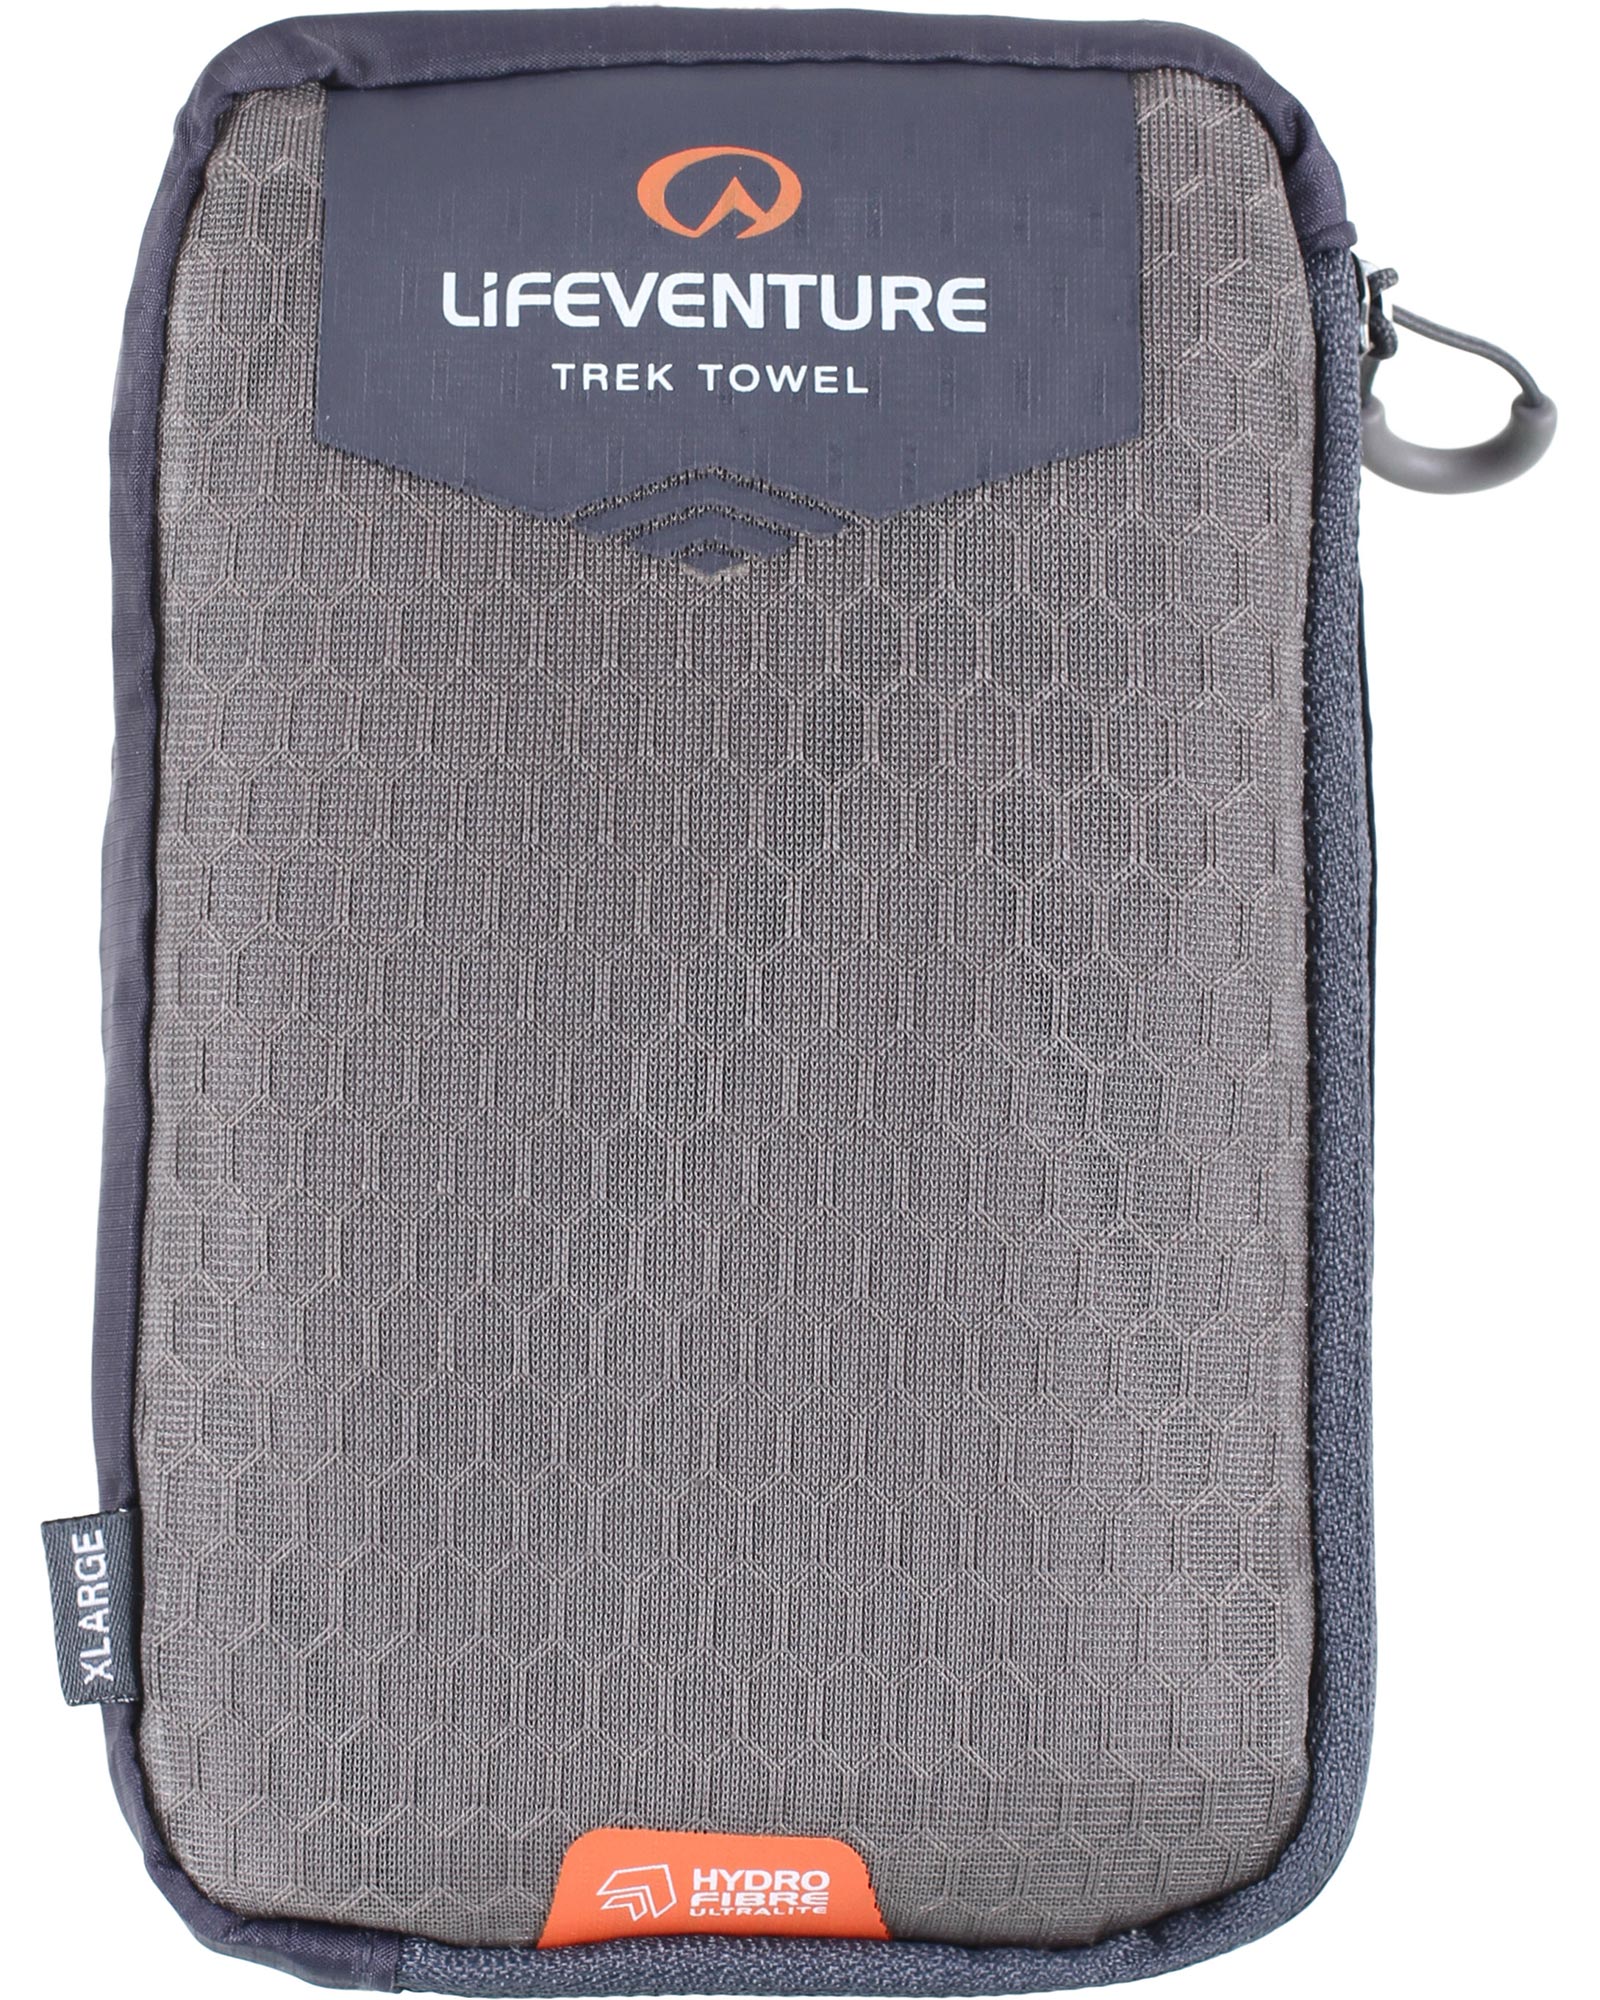 Lifeventure HydroFibre Trek Towel   X Large - Grey